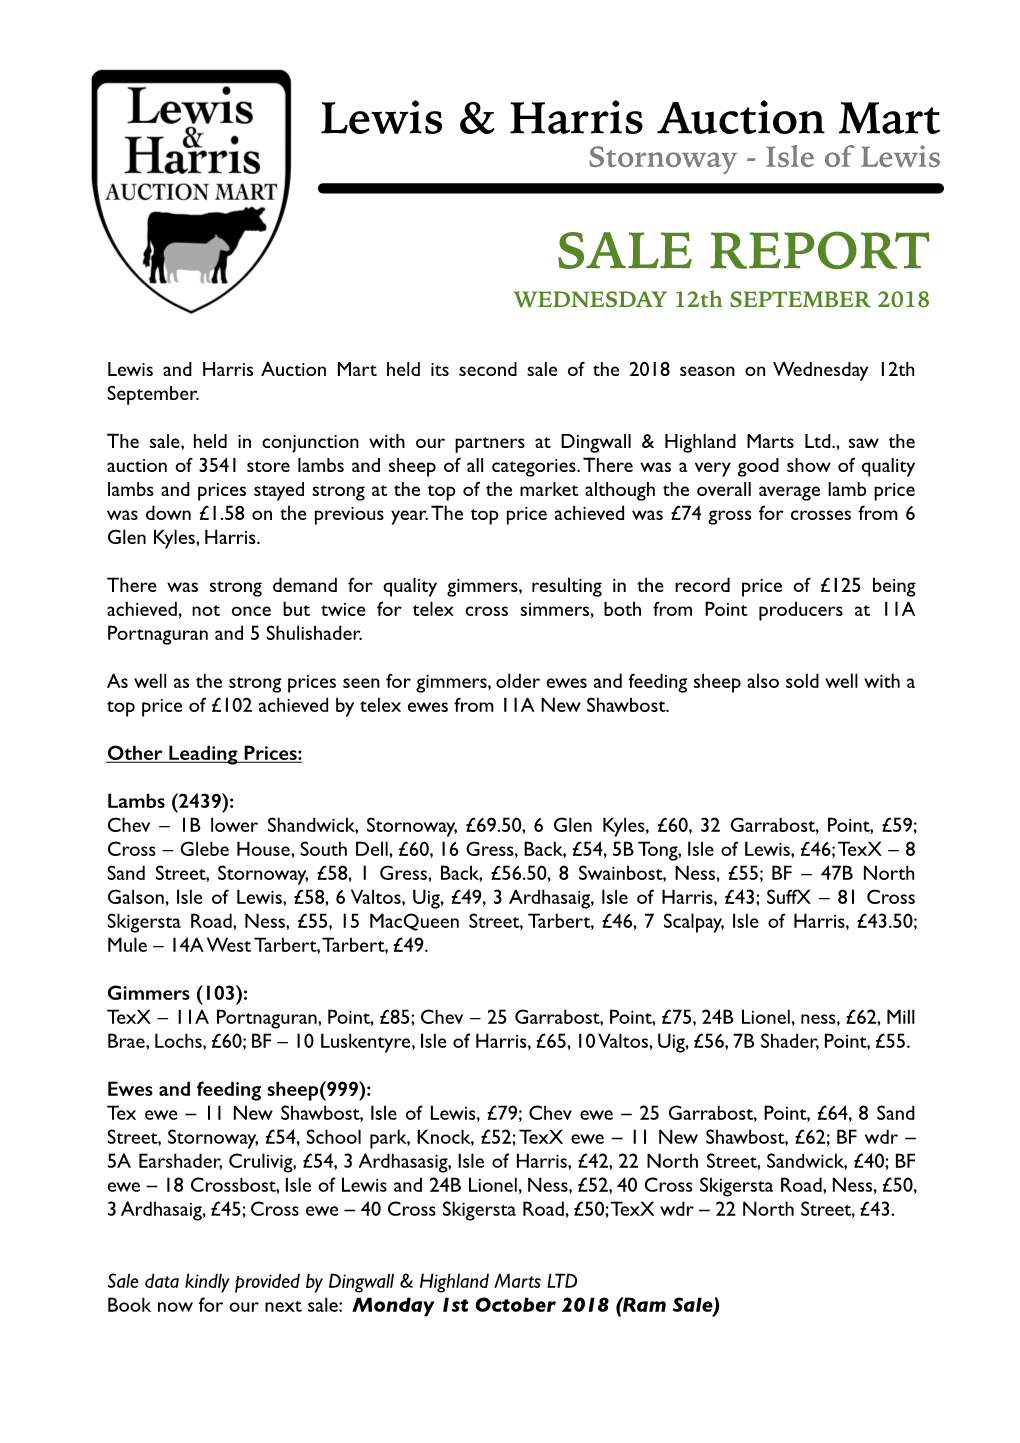 Sale Report 12Th Sep 18